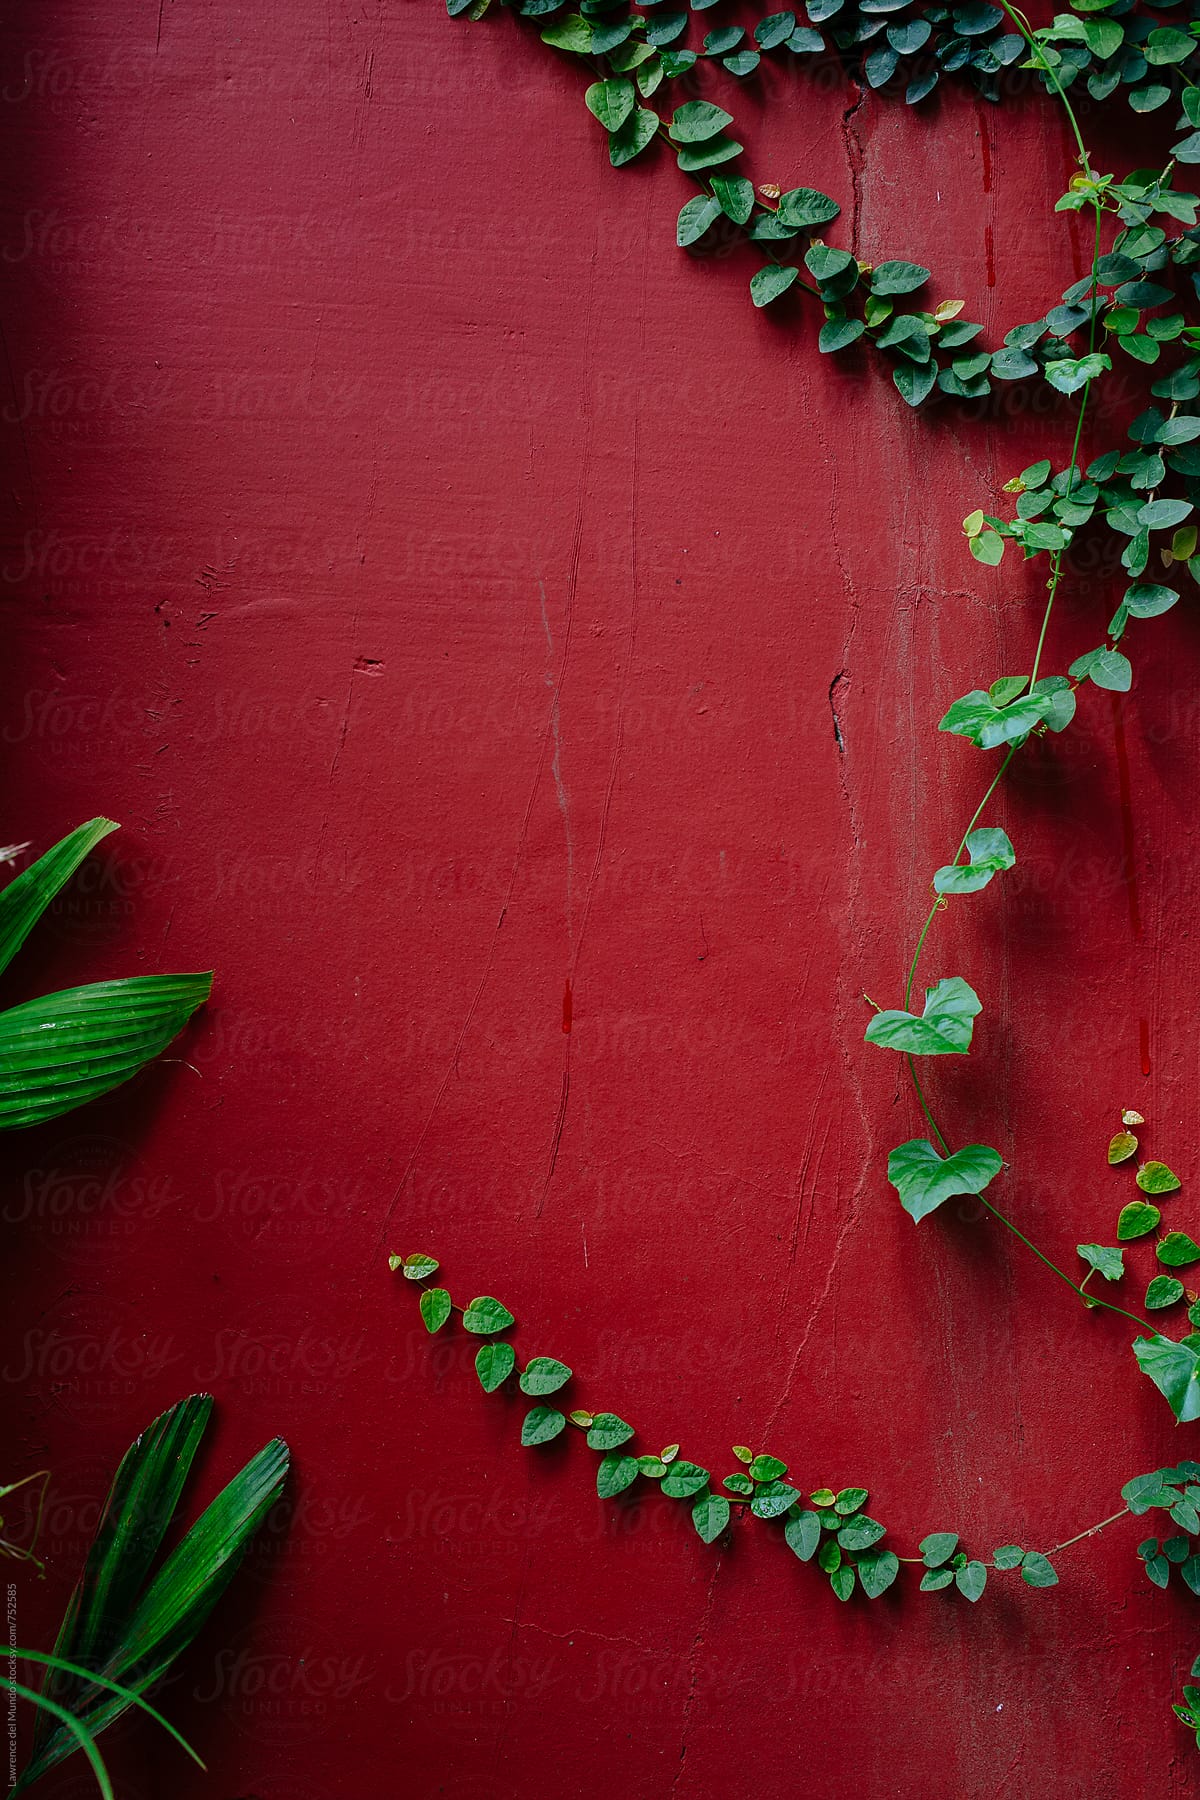 Green vines on maroon wall